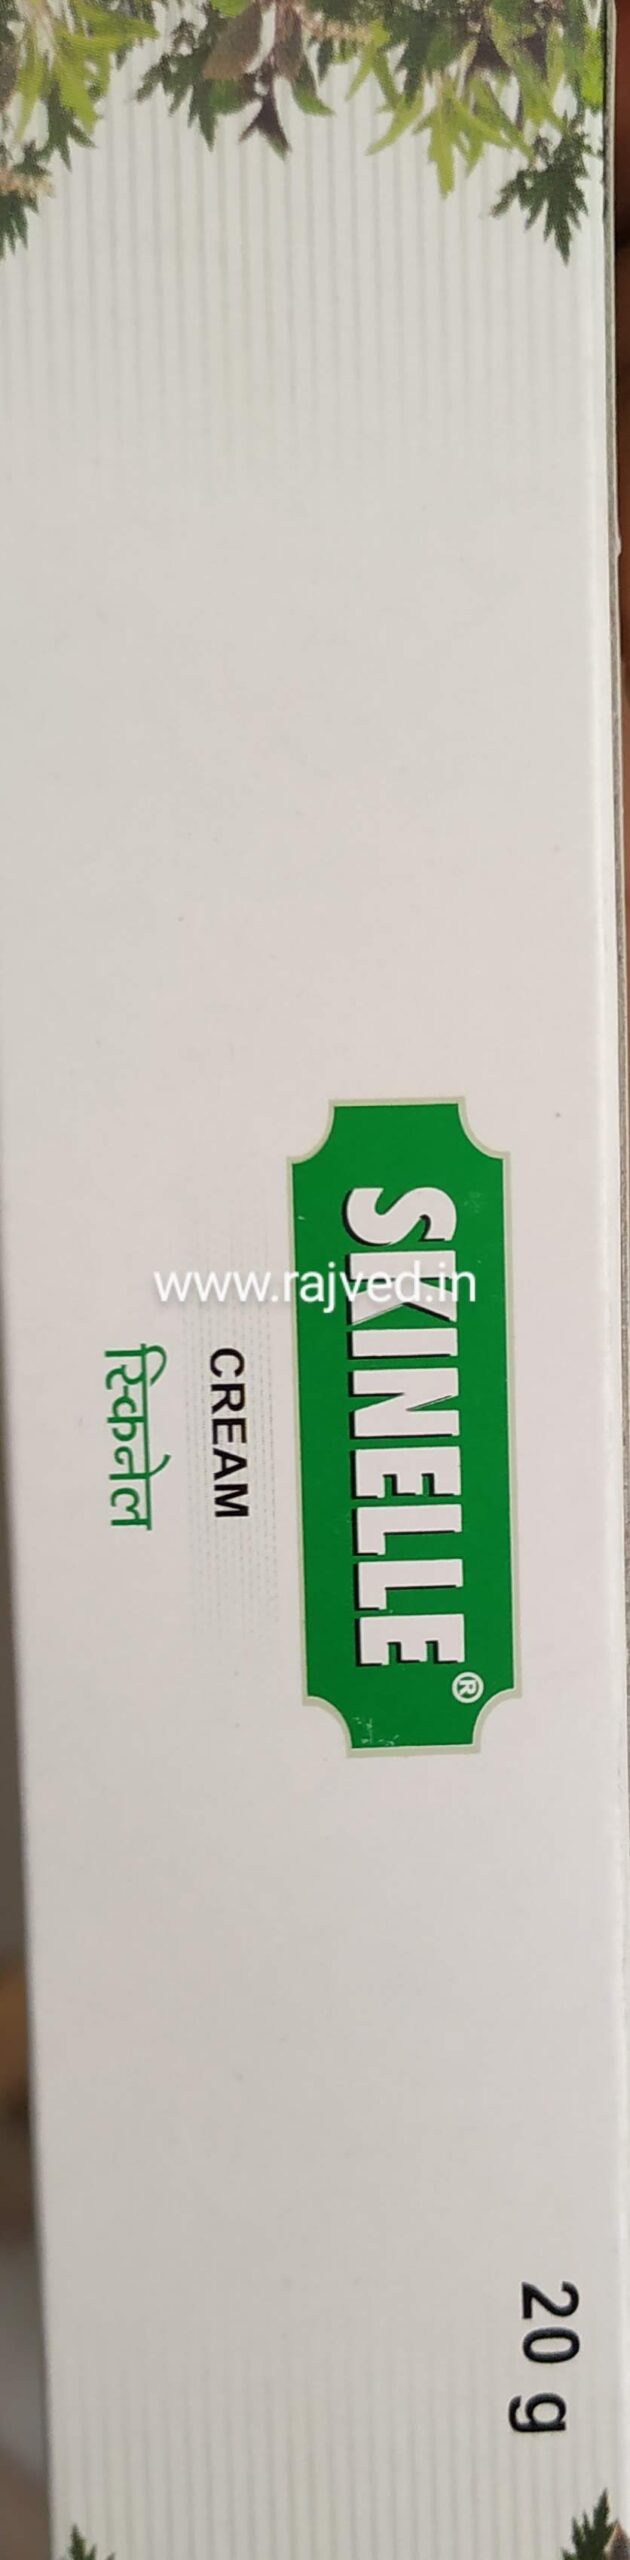 skinelle cream 40gram upto 15% off Charak pharma mumbai